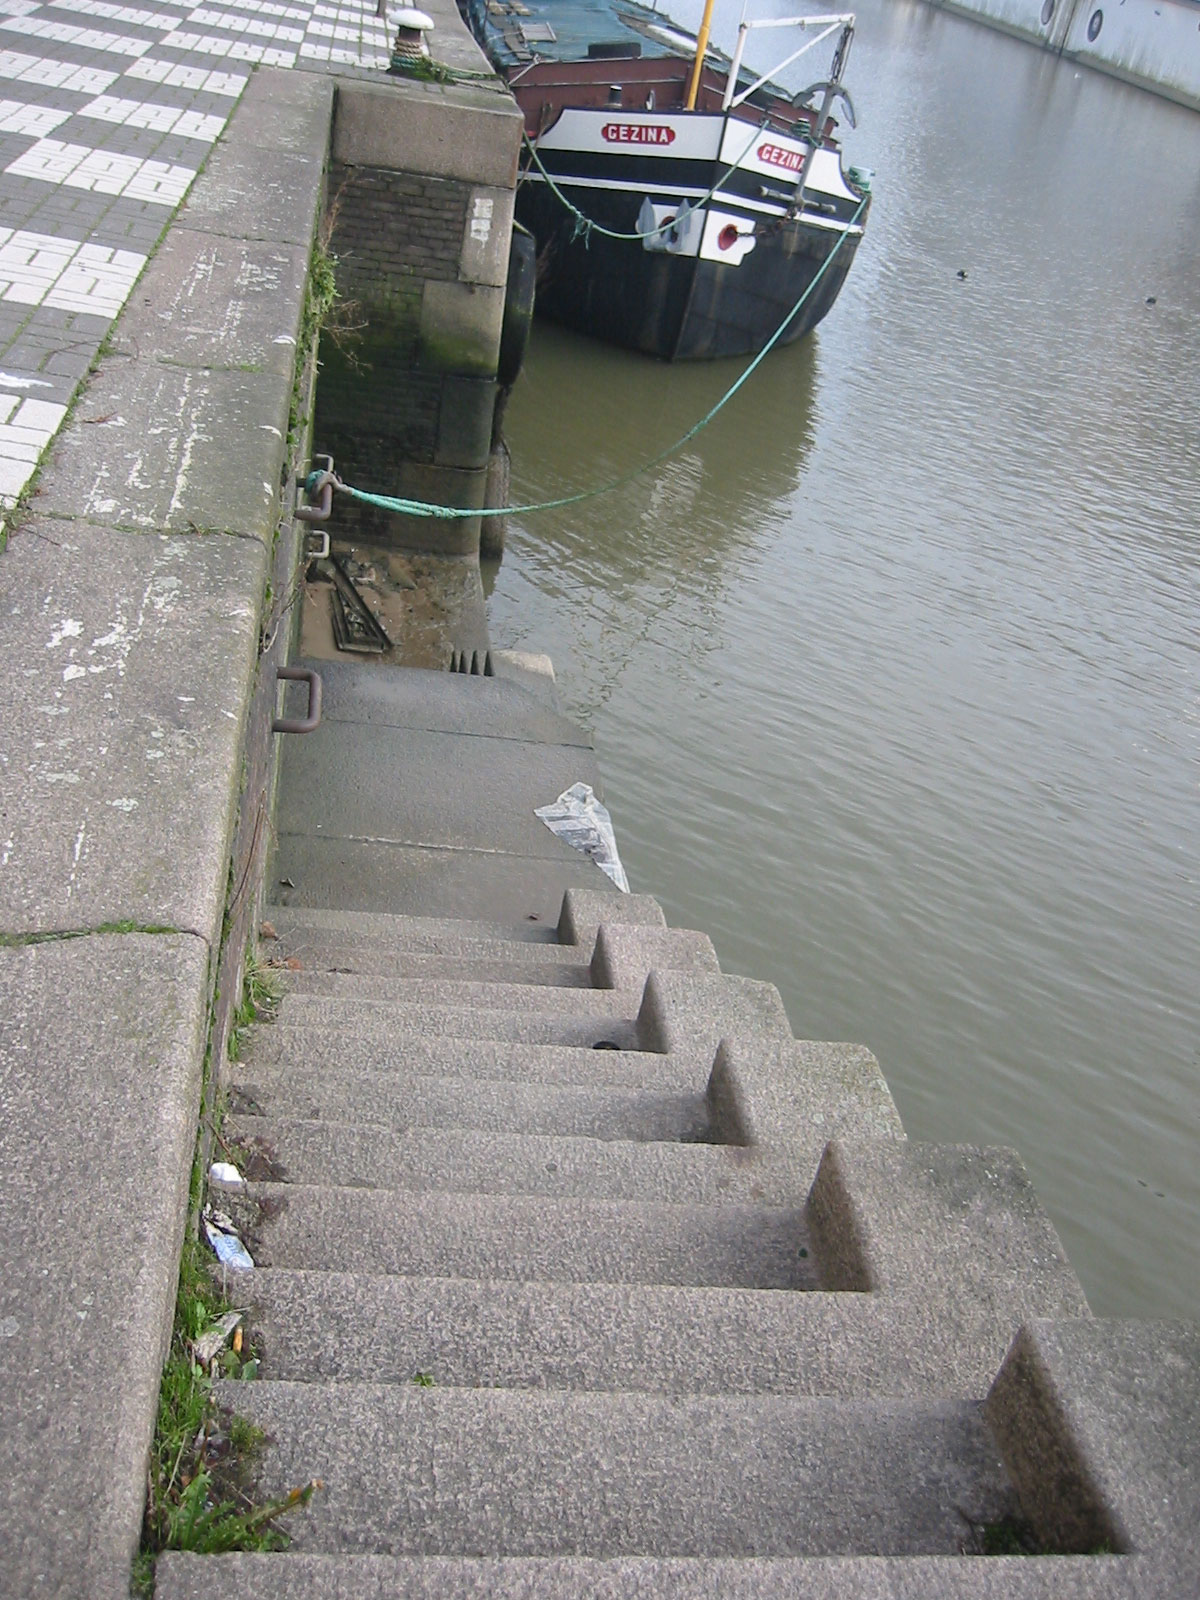 Stairs, Boat, Climb, Concrete, Down, HQ Photo